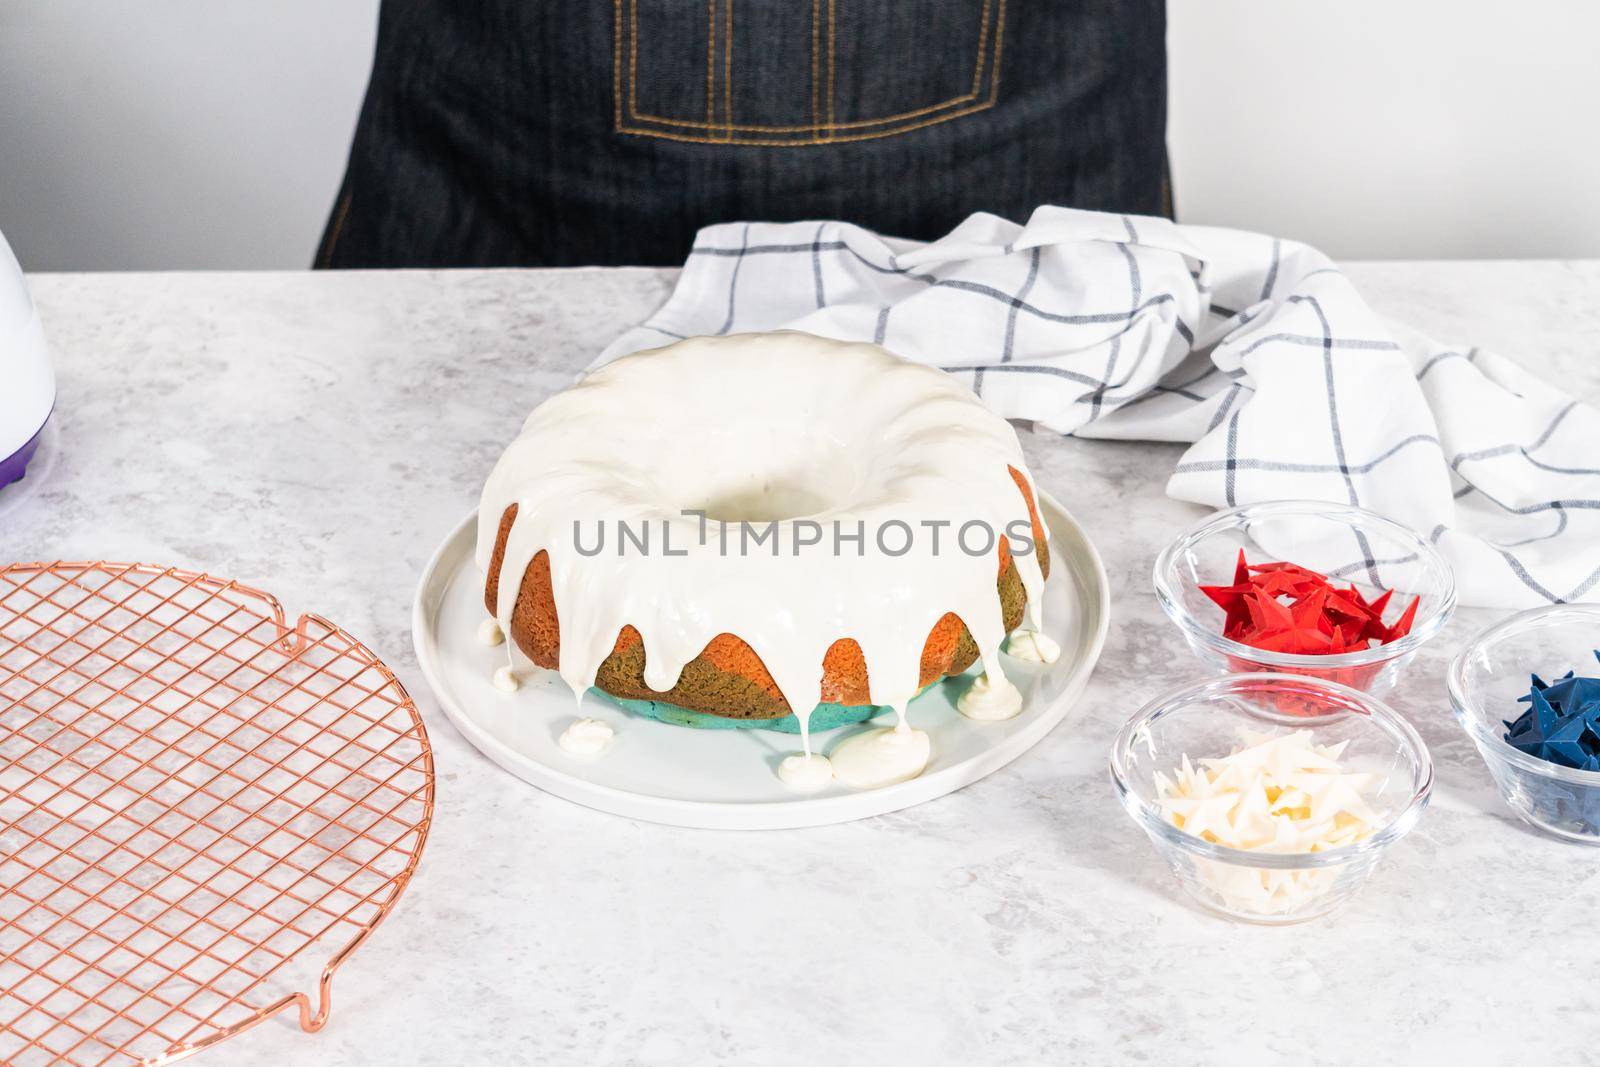 Glazing freshly baked bundt cake with vanilla glaze.